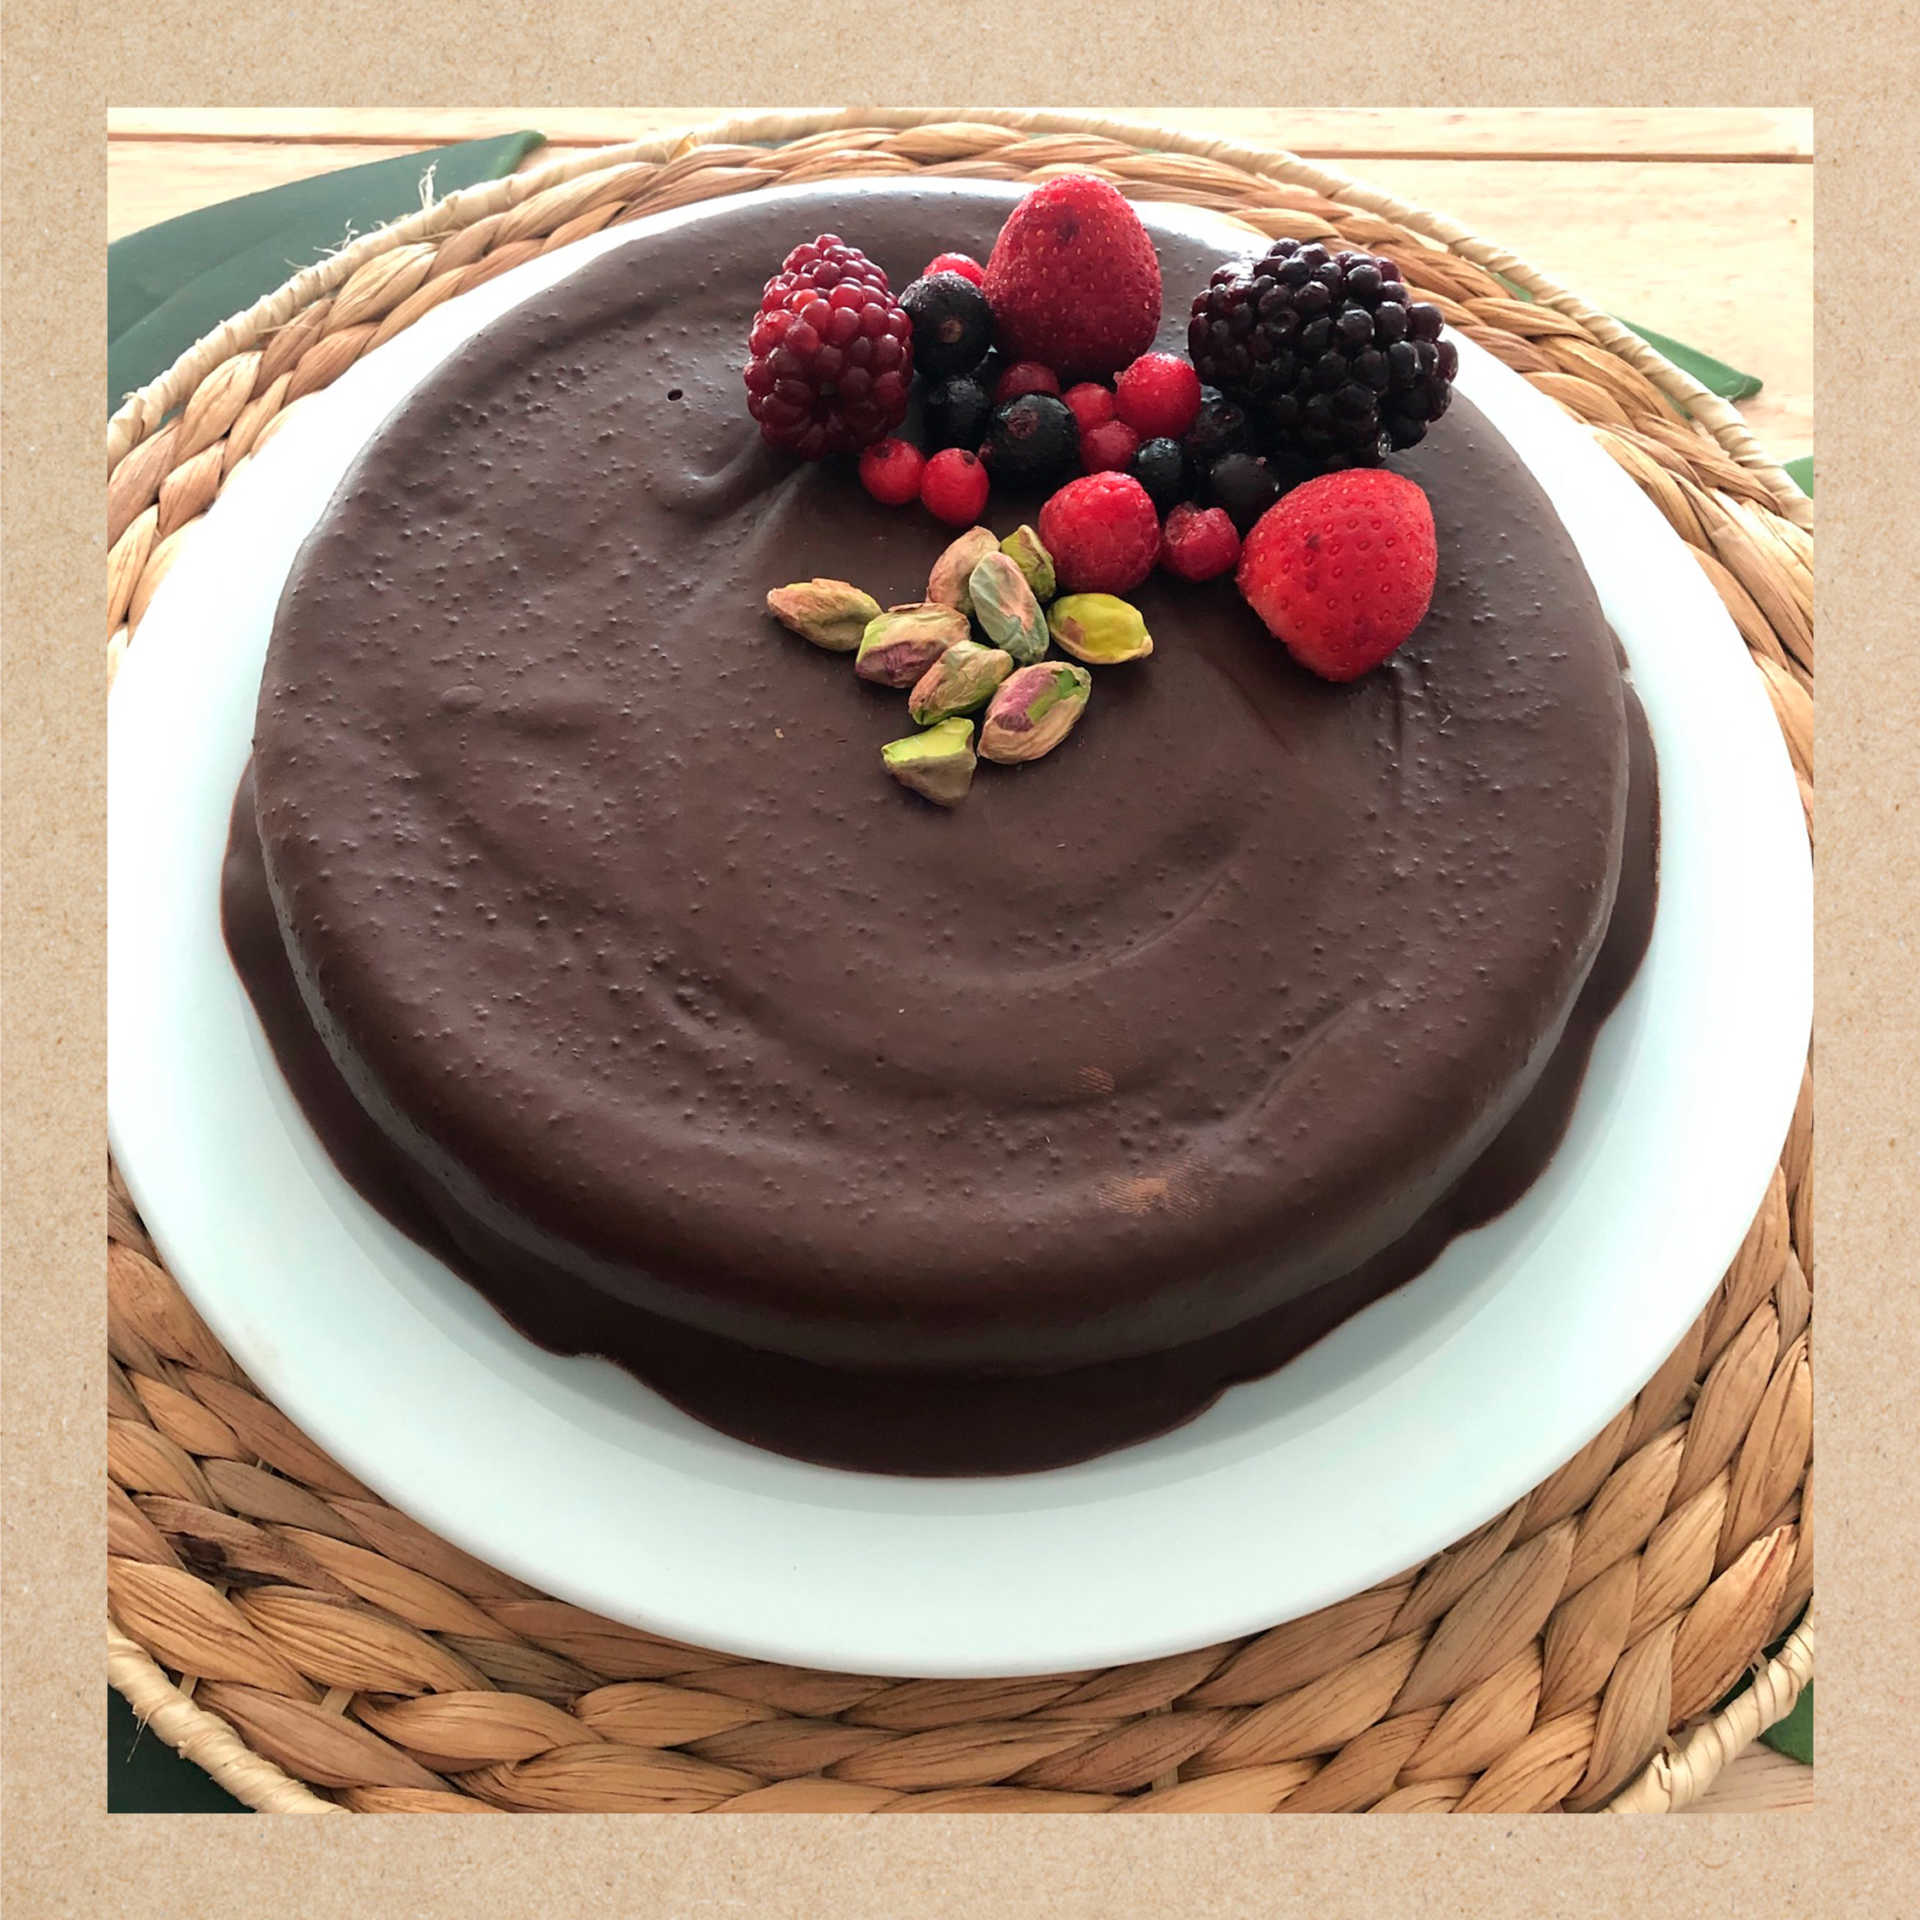 Imagen de una tarta de chocolate